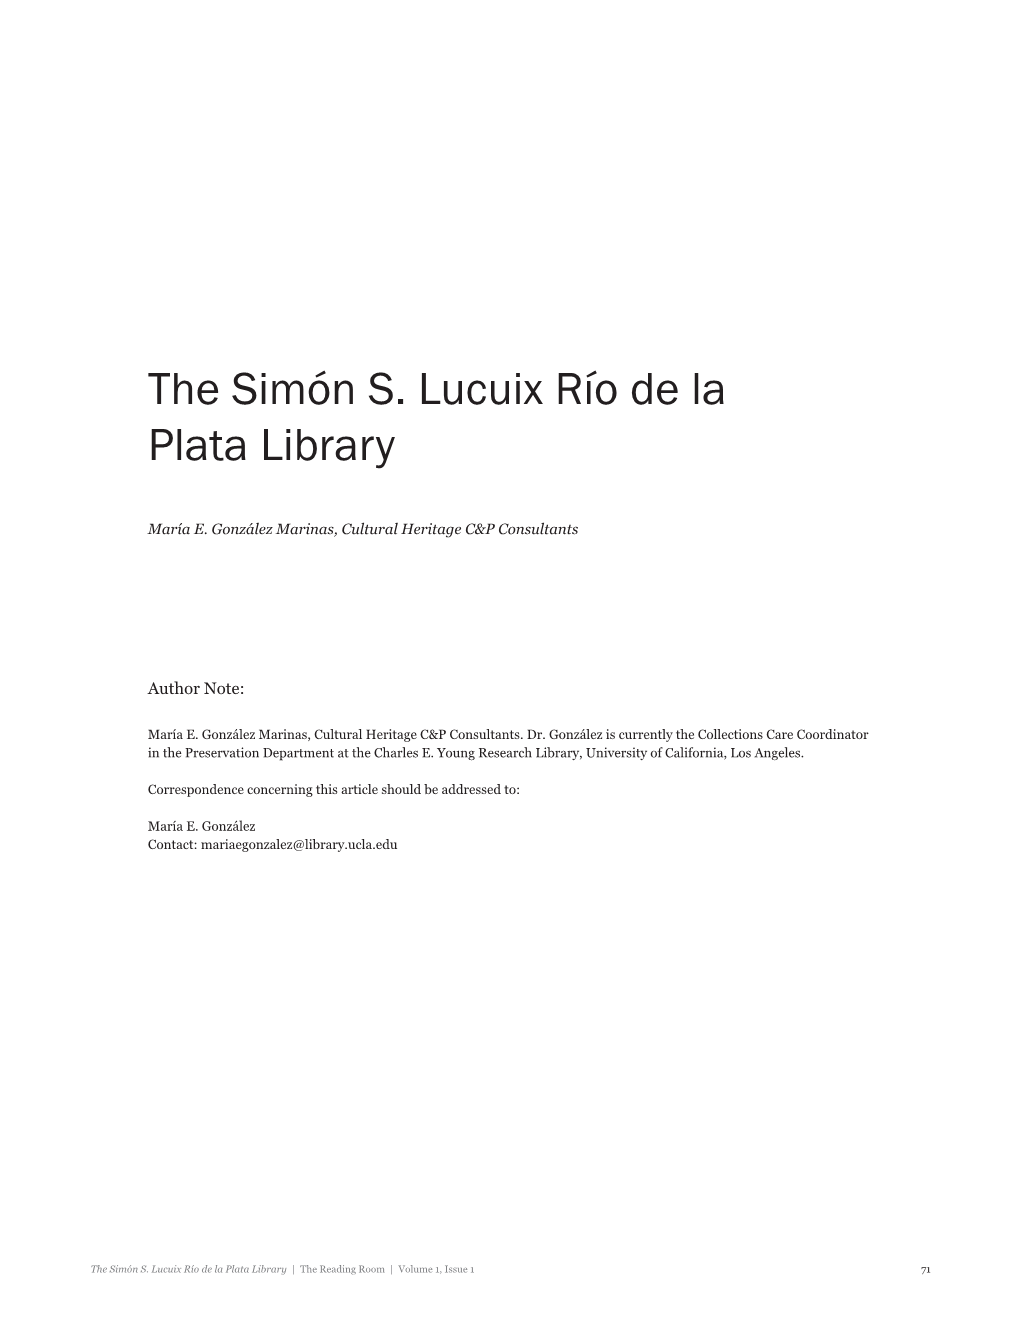 The Simón S. Lucuix Río De La Plata Library | the Reading Room | Volume 1, Issue 1 71 Abstract